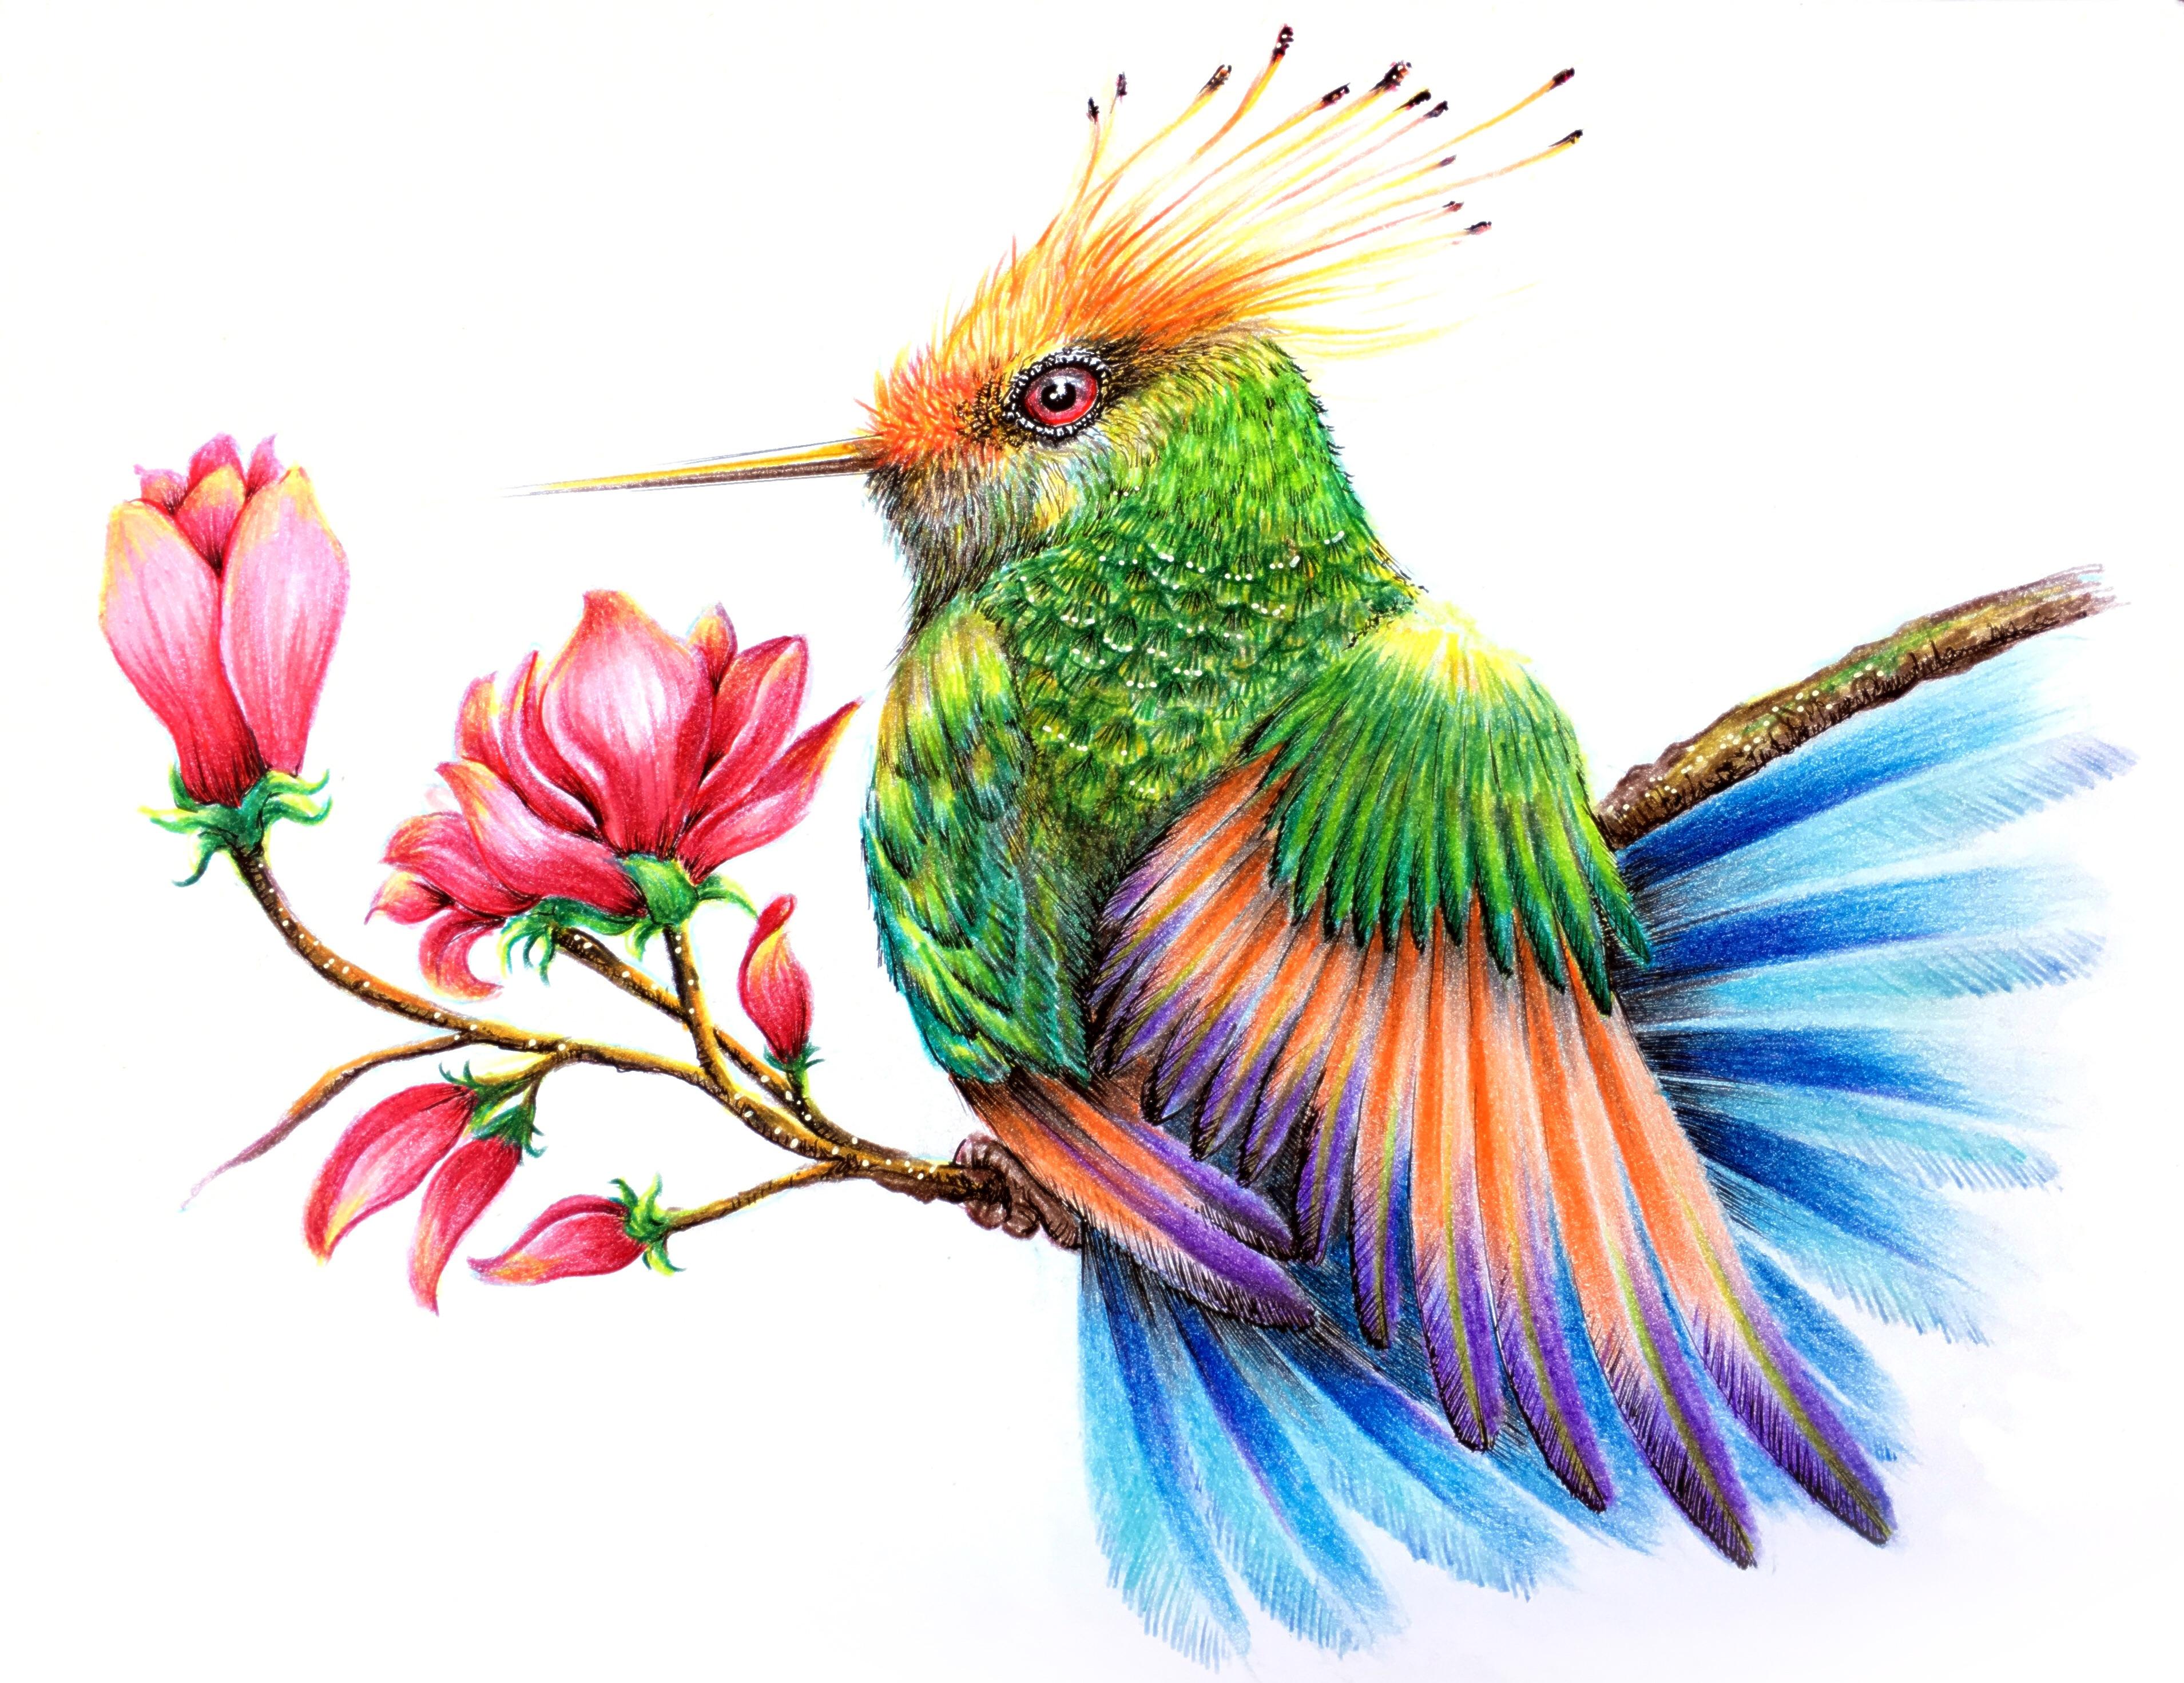 hummingbird drawing colour